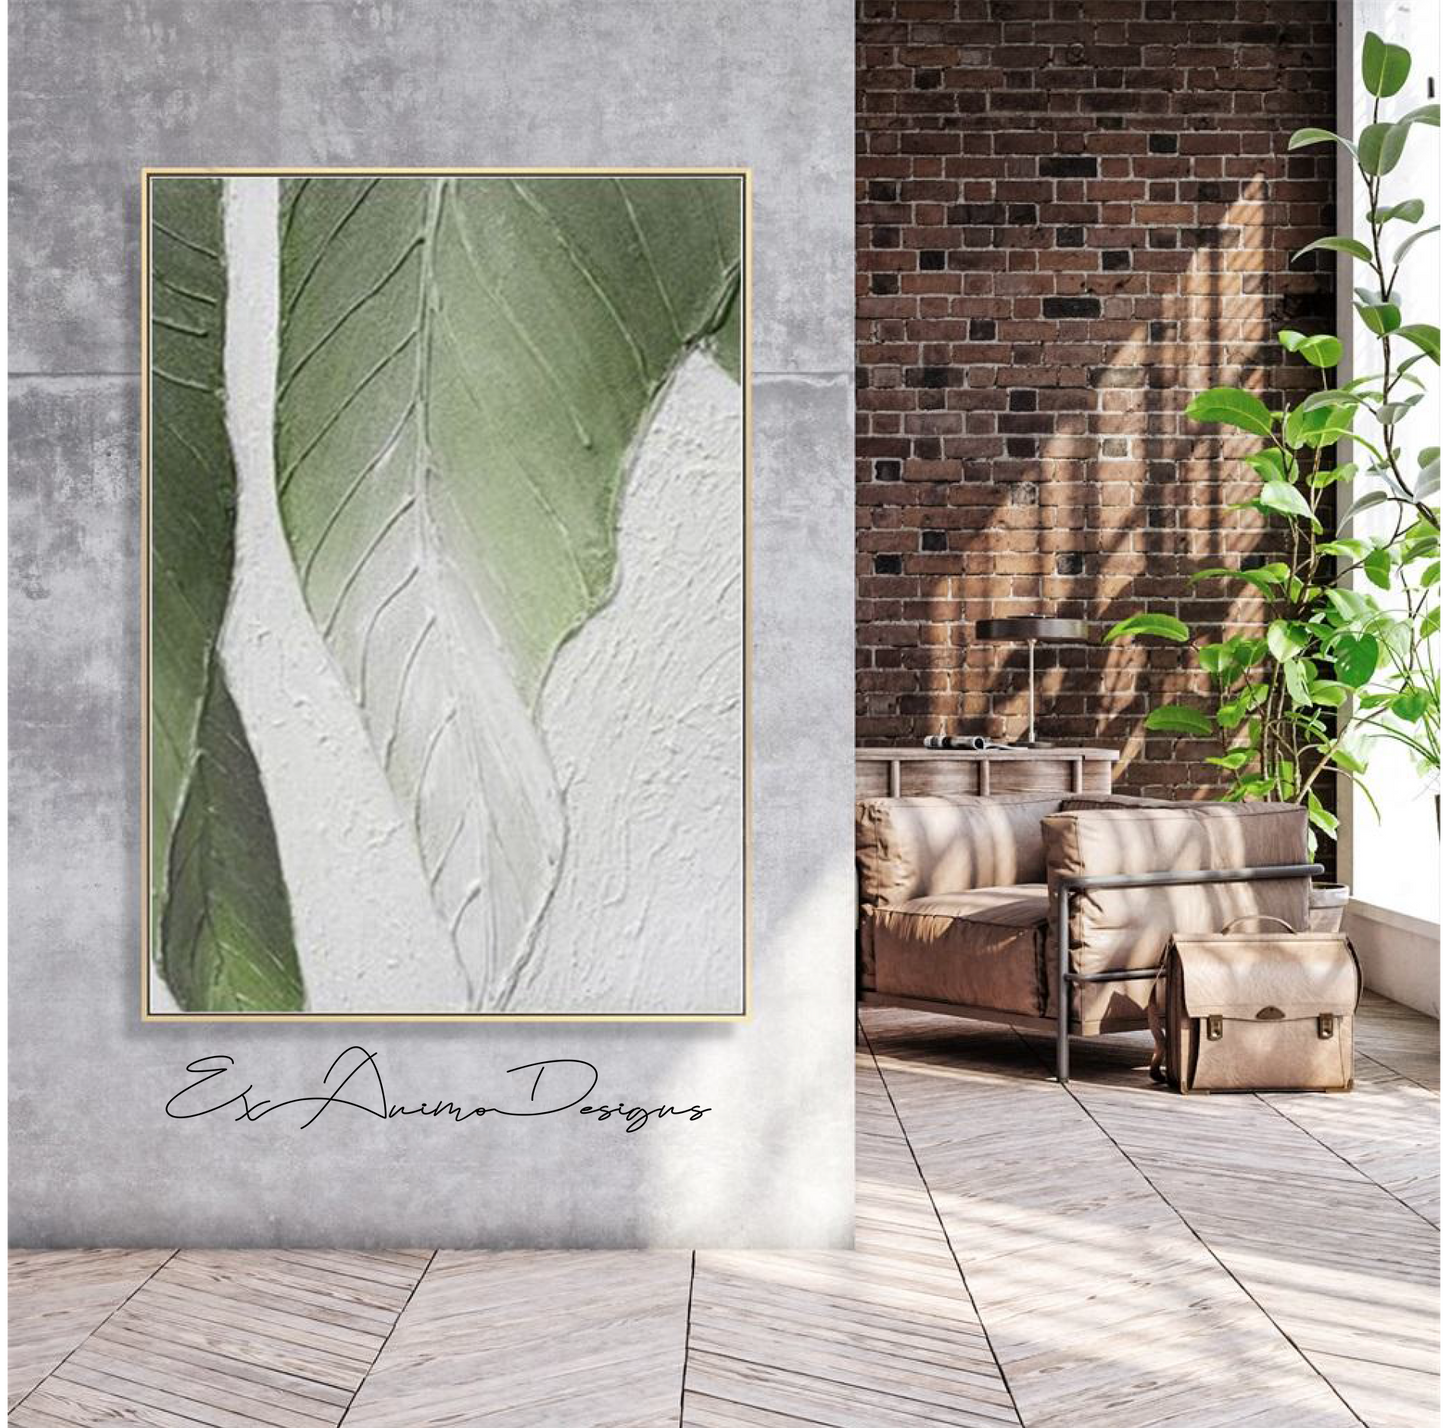 Ex Animo Designs - Botanical Green Leaf Textured Art Acrylic Painting